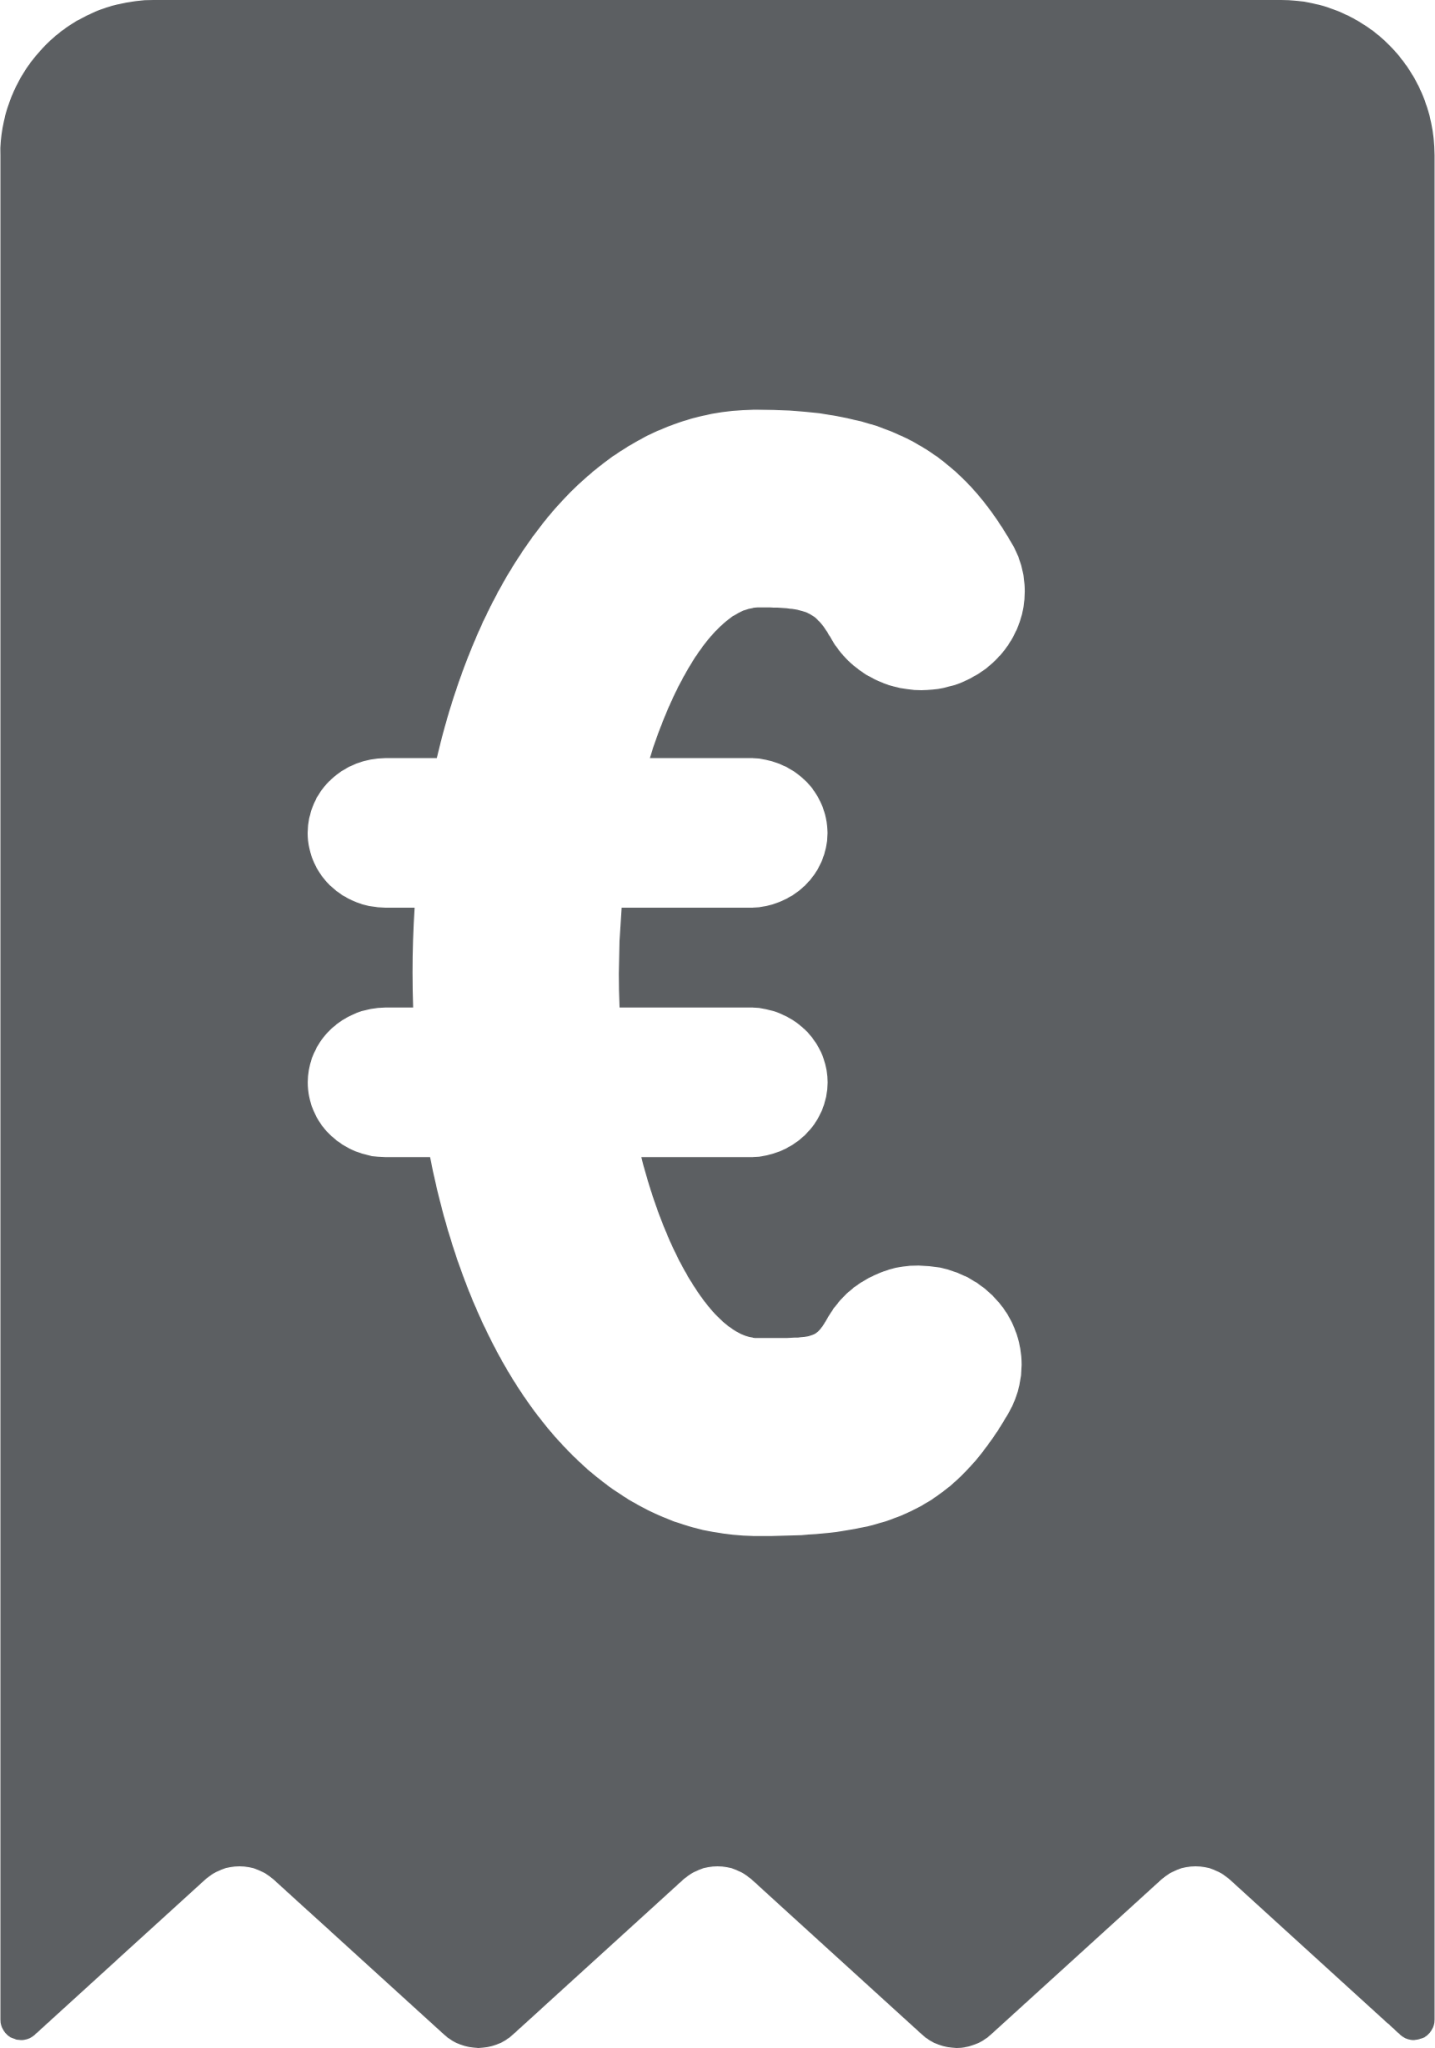 billing statement euro major icon